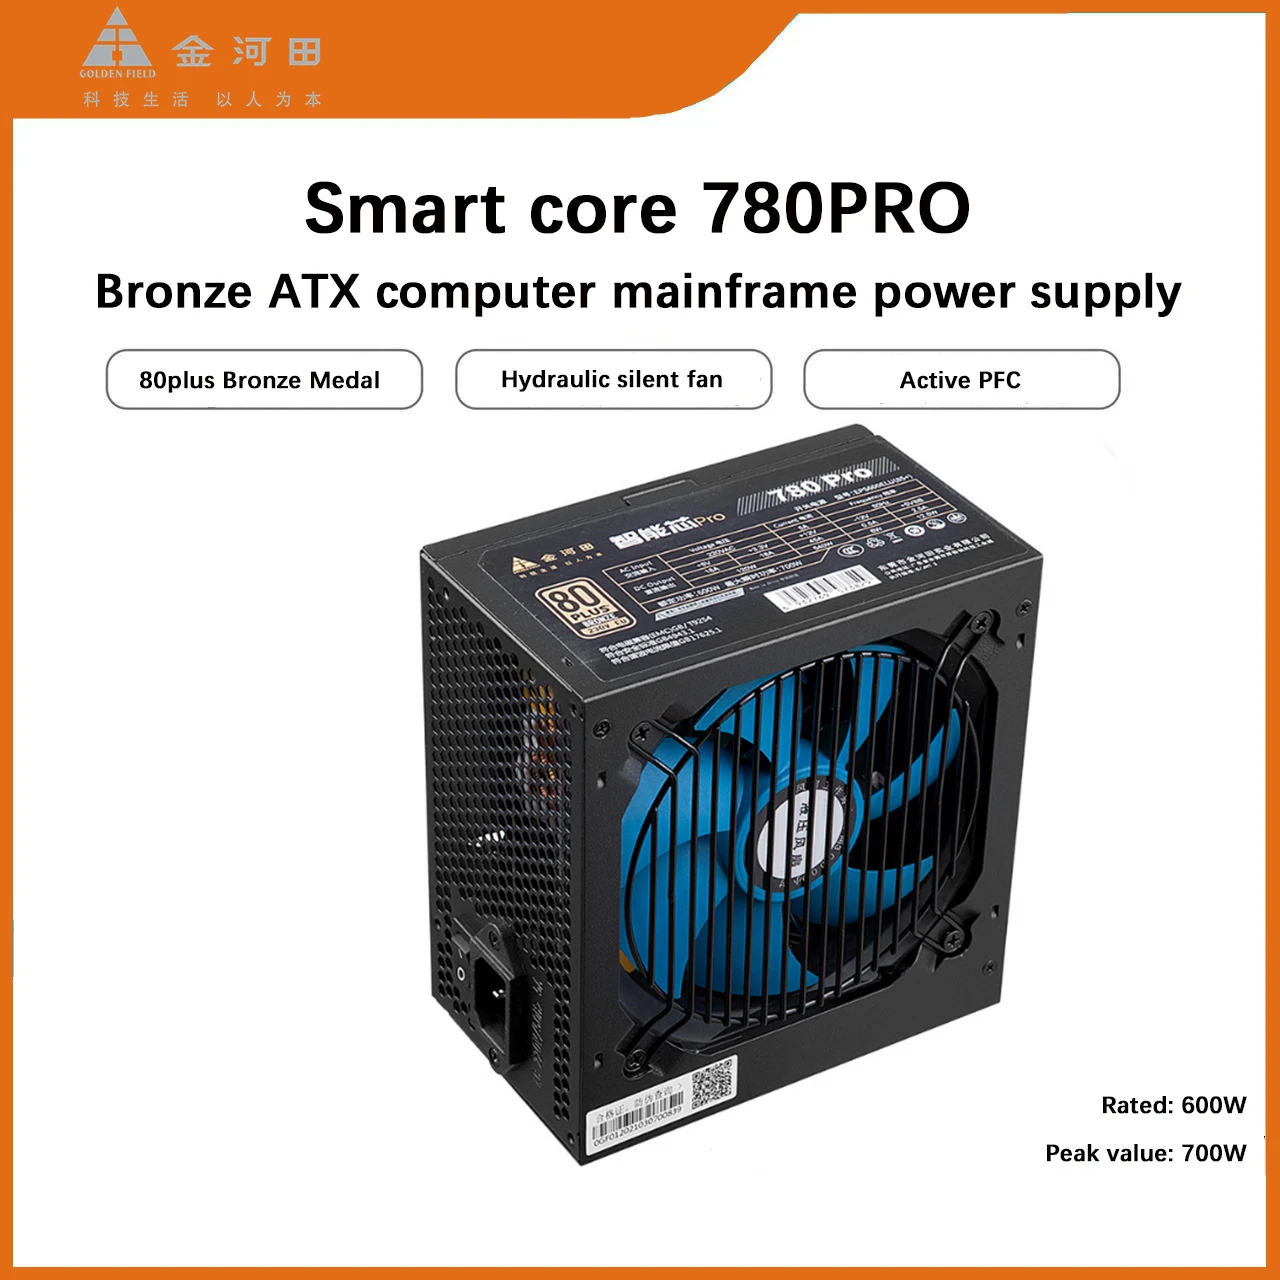 

Golden field Smart Core 780Pro Bronze host Power supply rated at 600 watts peak 700W ATX standard brand Silent power supply